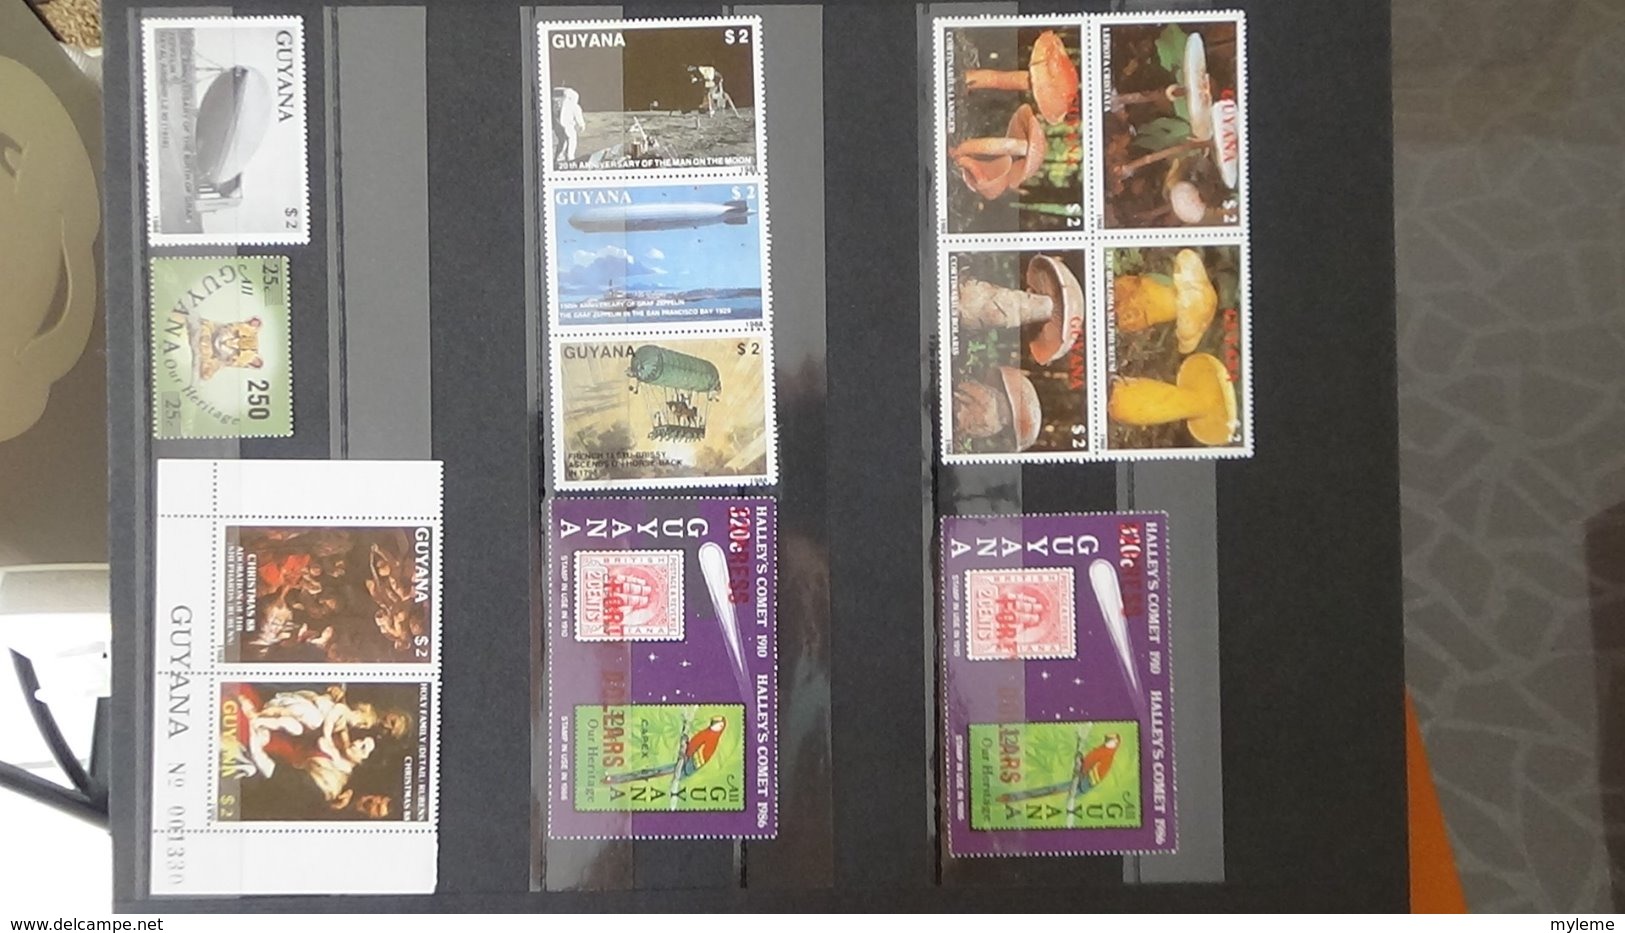 Belle collection de GUYANE en timbres et fins de catalogue **. A saisir !!!